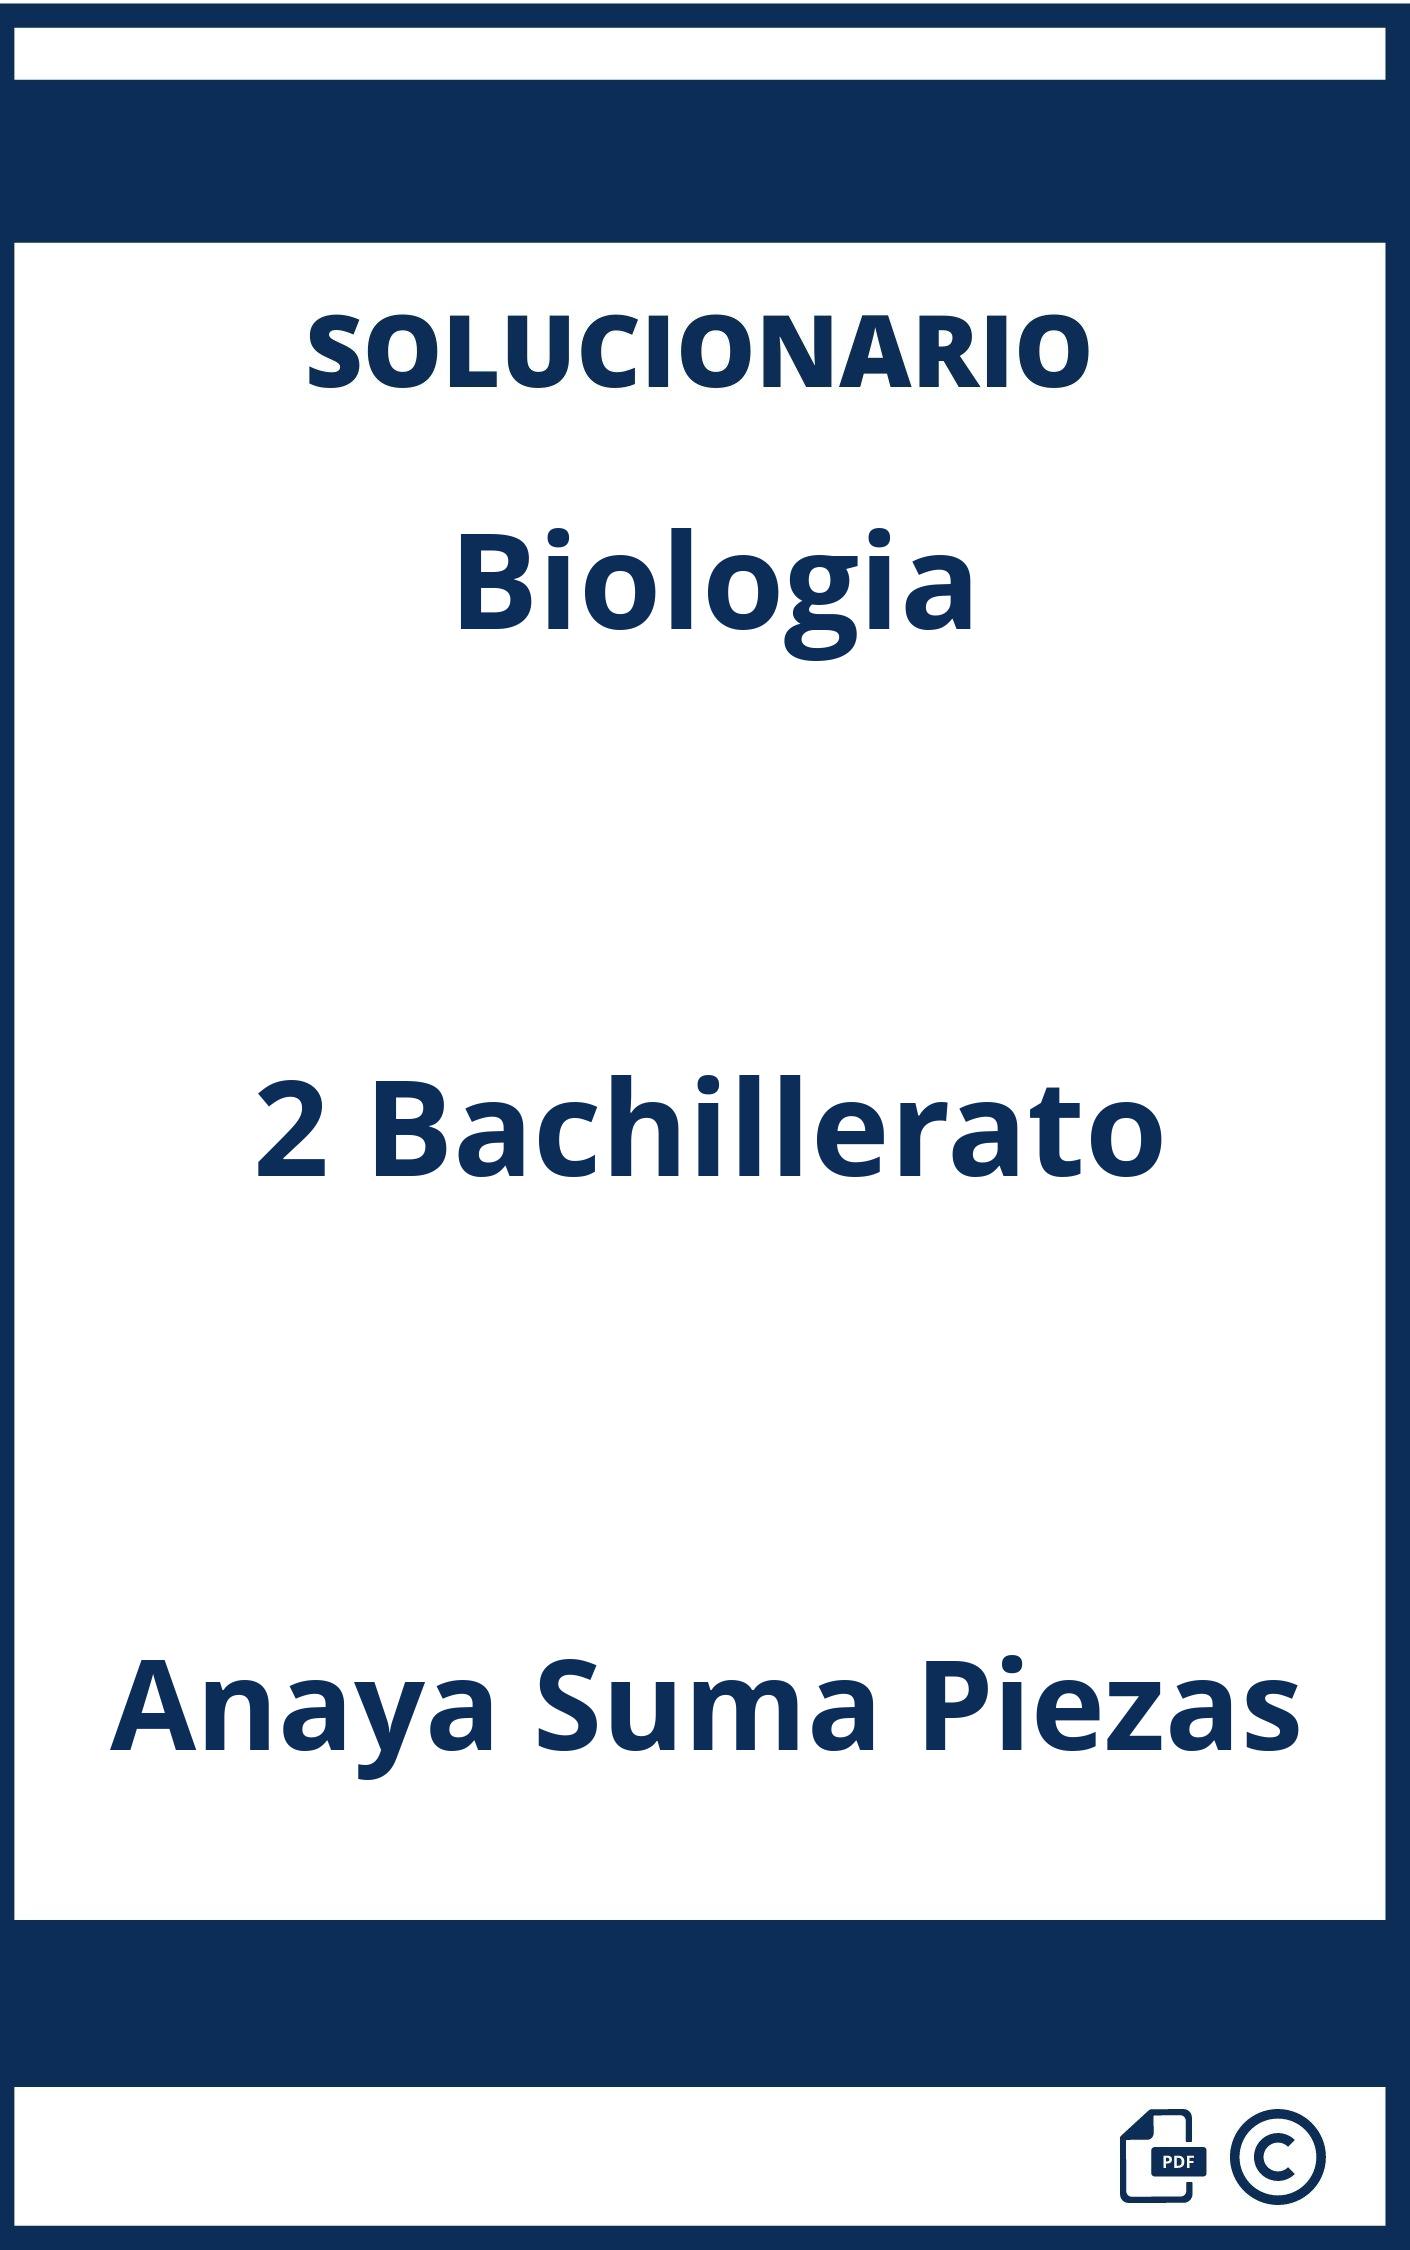 Solucionario Biologia 2 Bachillerato Anaya Suma Piezas